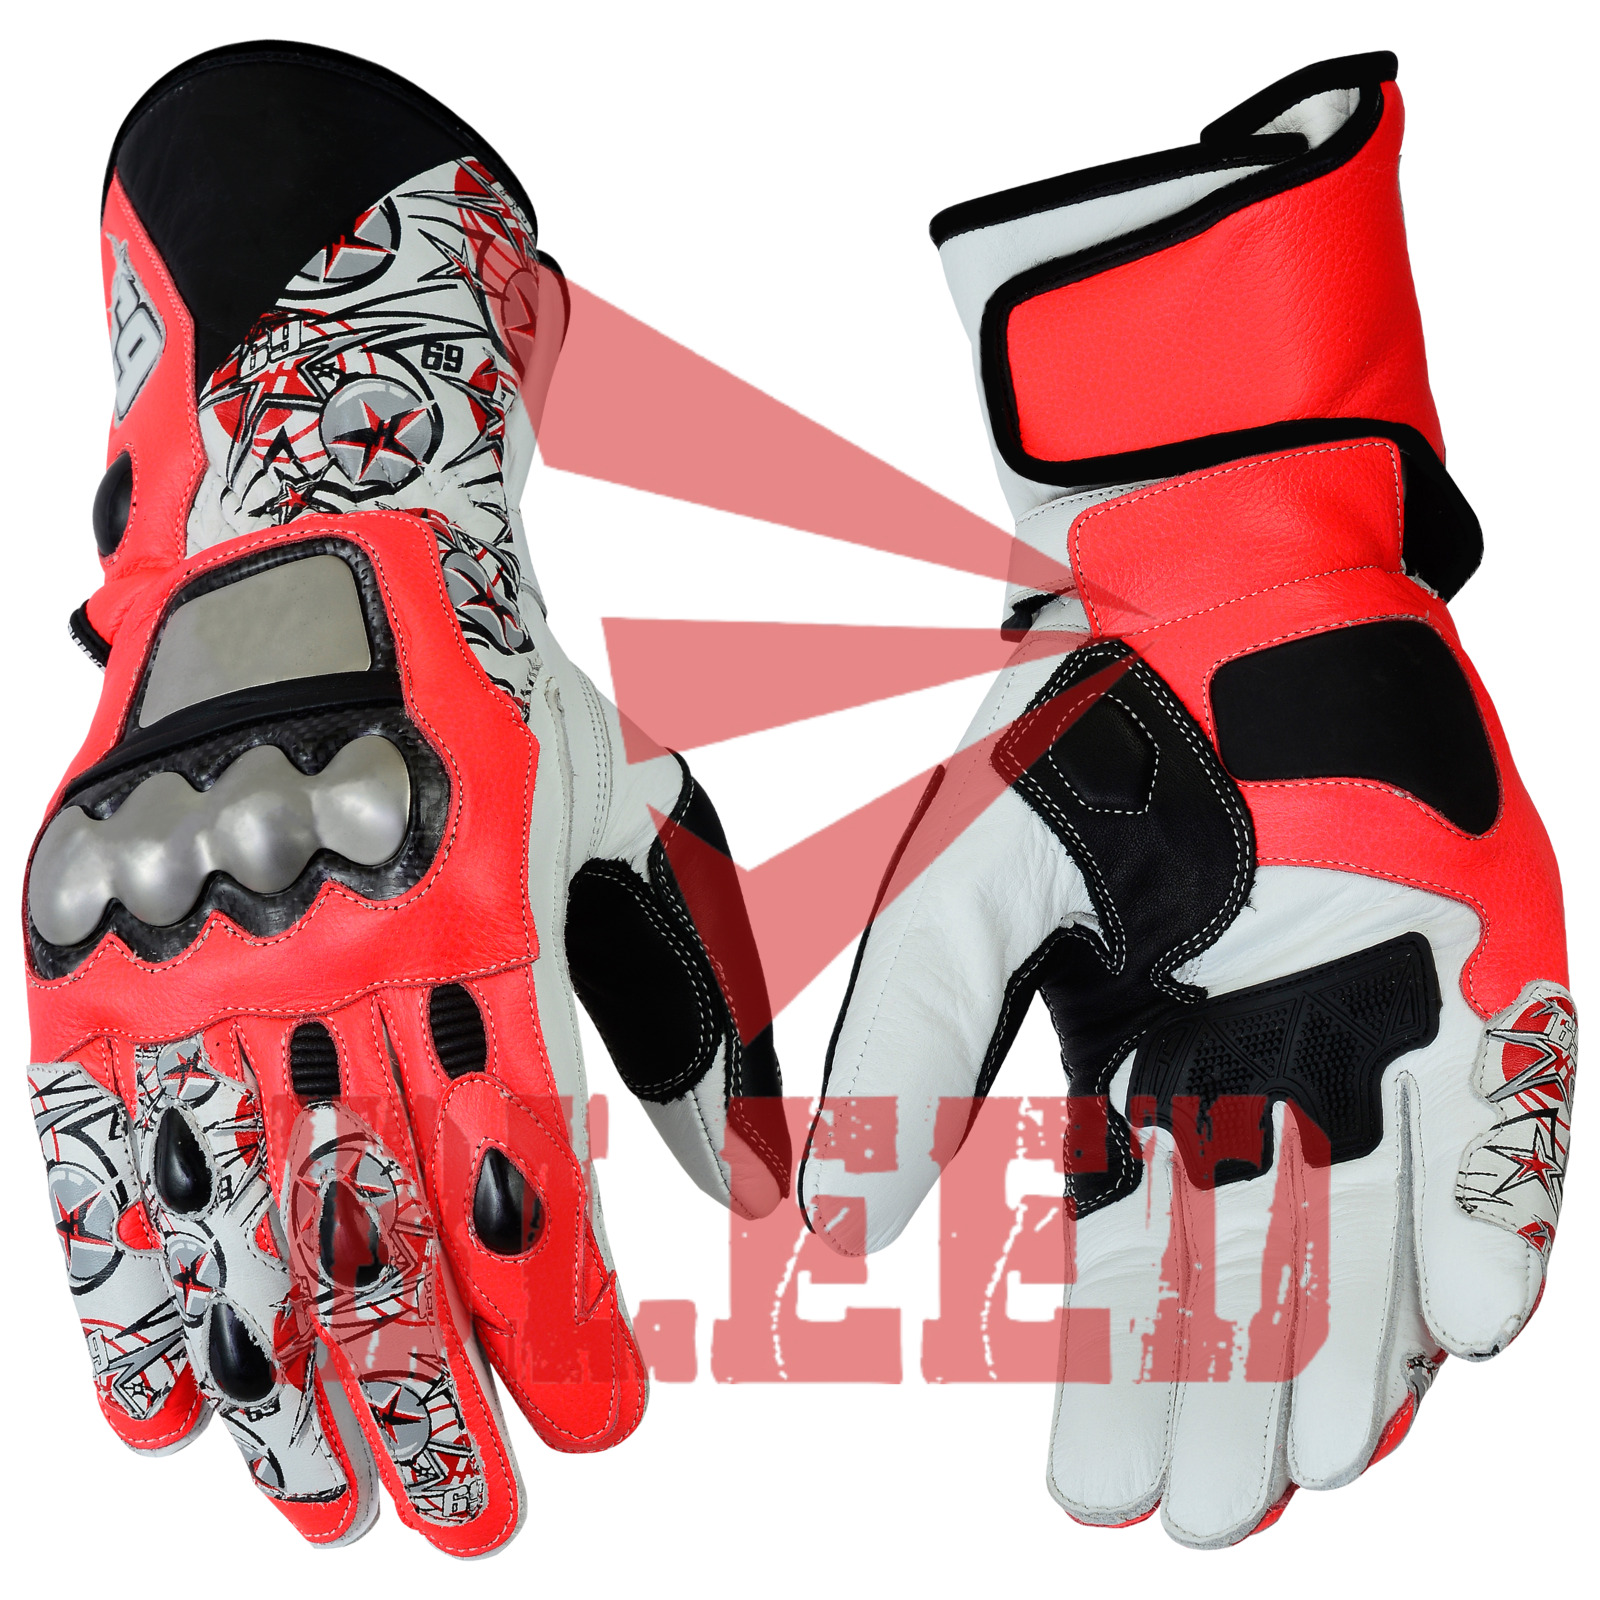 Nicky Hayden Motorbike Gloves Motorcycle Racing Gloves